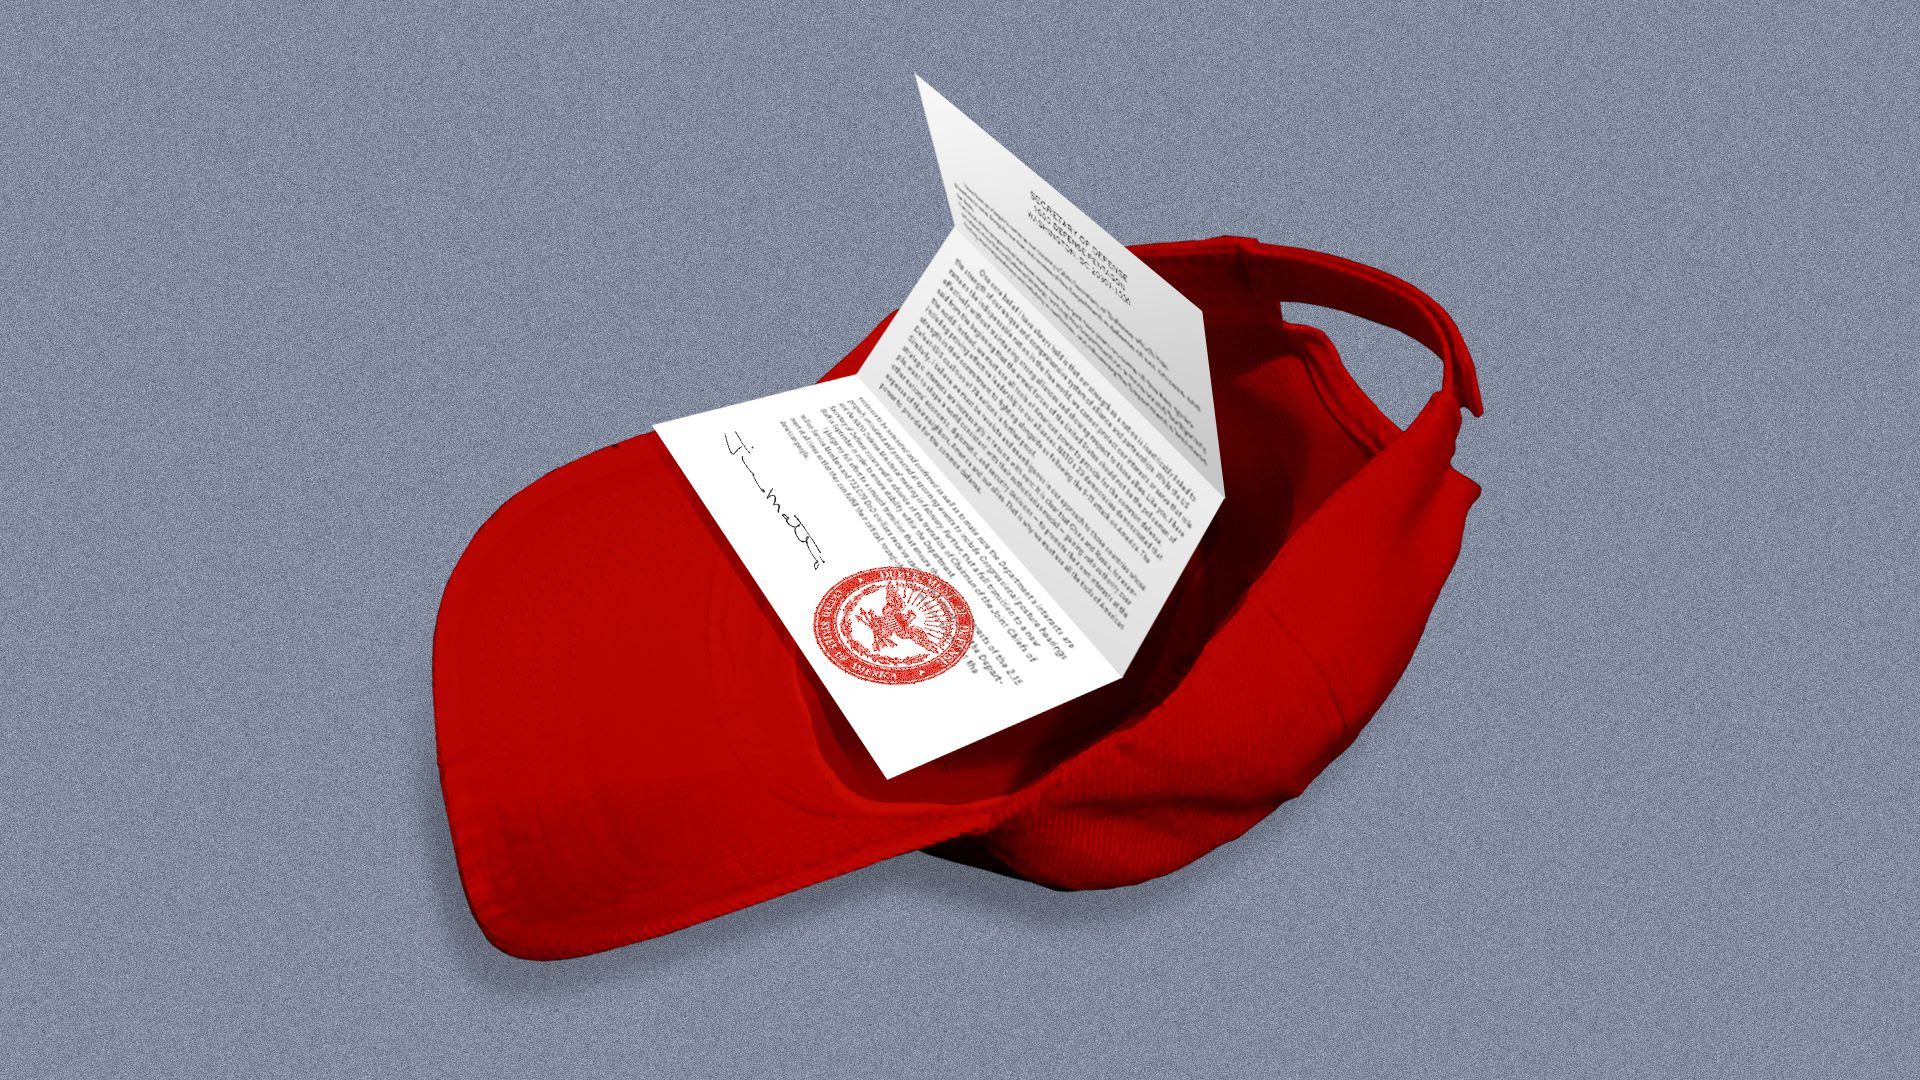 An illustration of Mattis' resignation in a MAGA hat